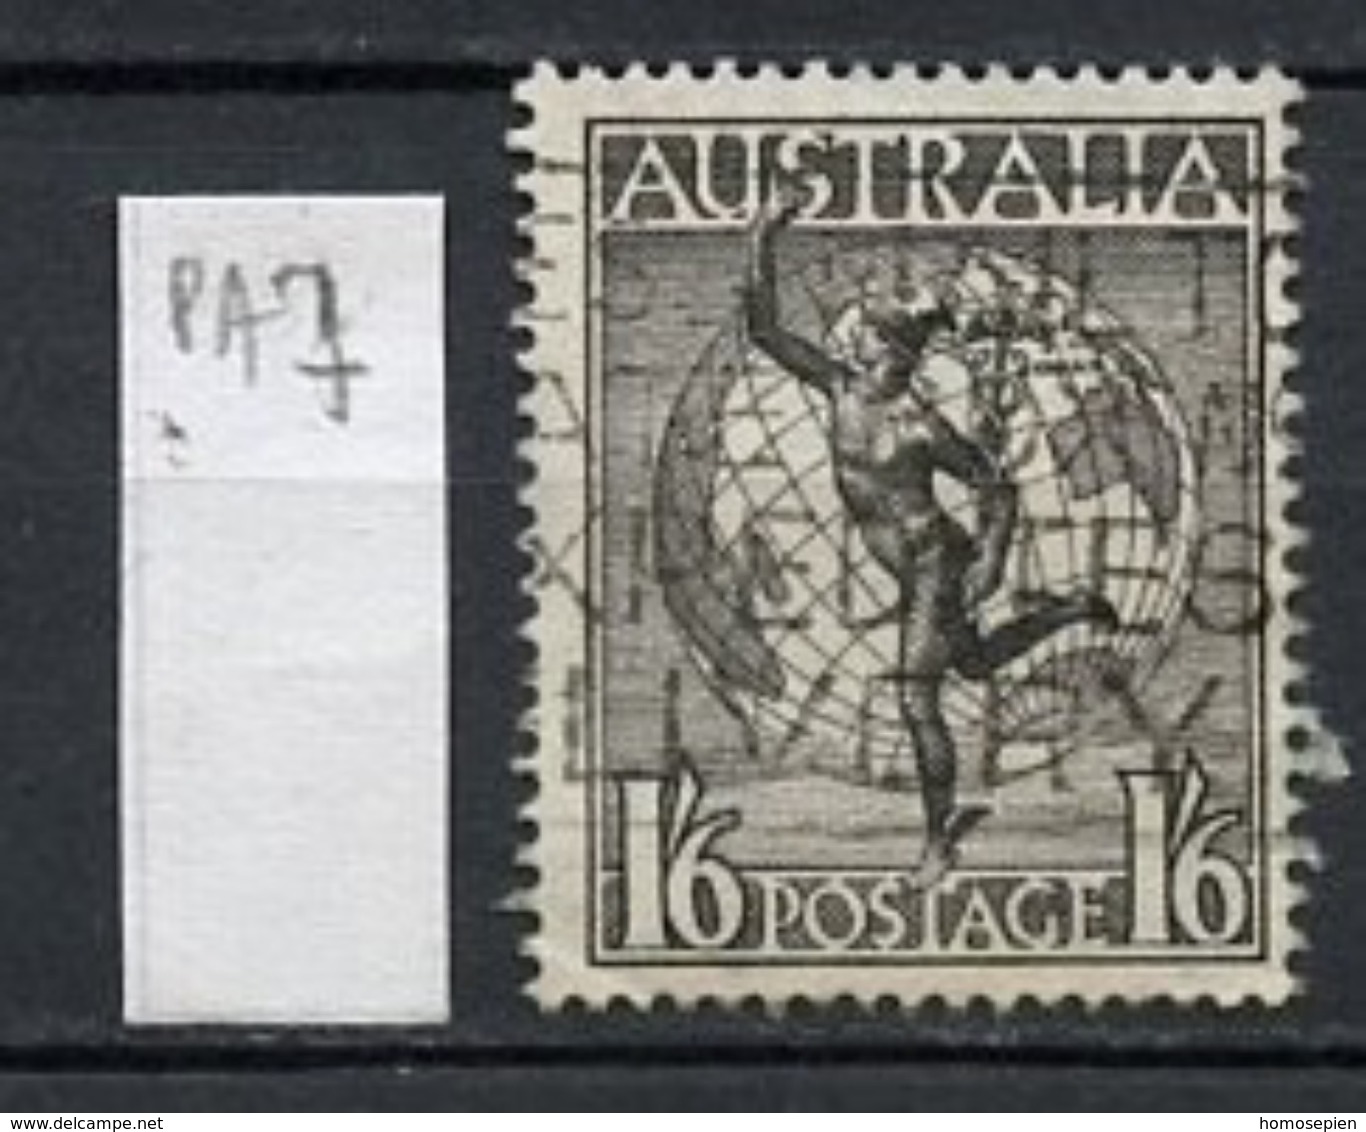 Australie - Australia Poste Aérienne 1949 Y&T N°PA7 - Michel N°185 (o) - 1/6 Allégorie - Usados